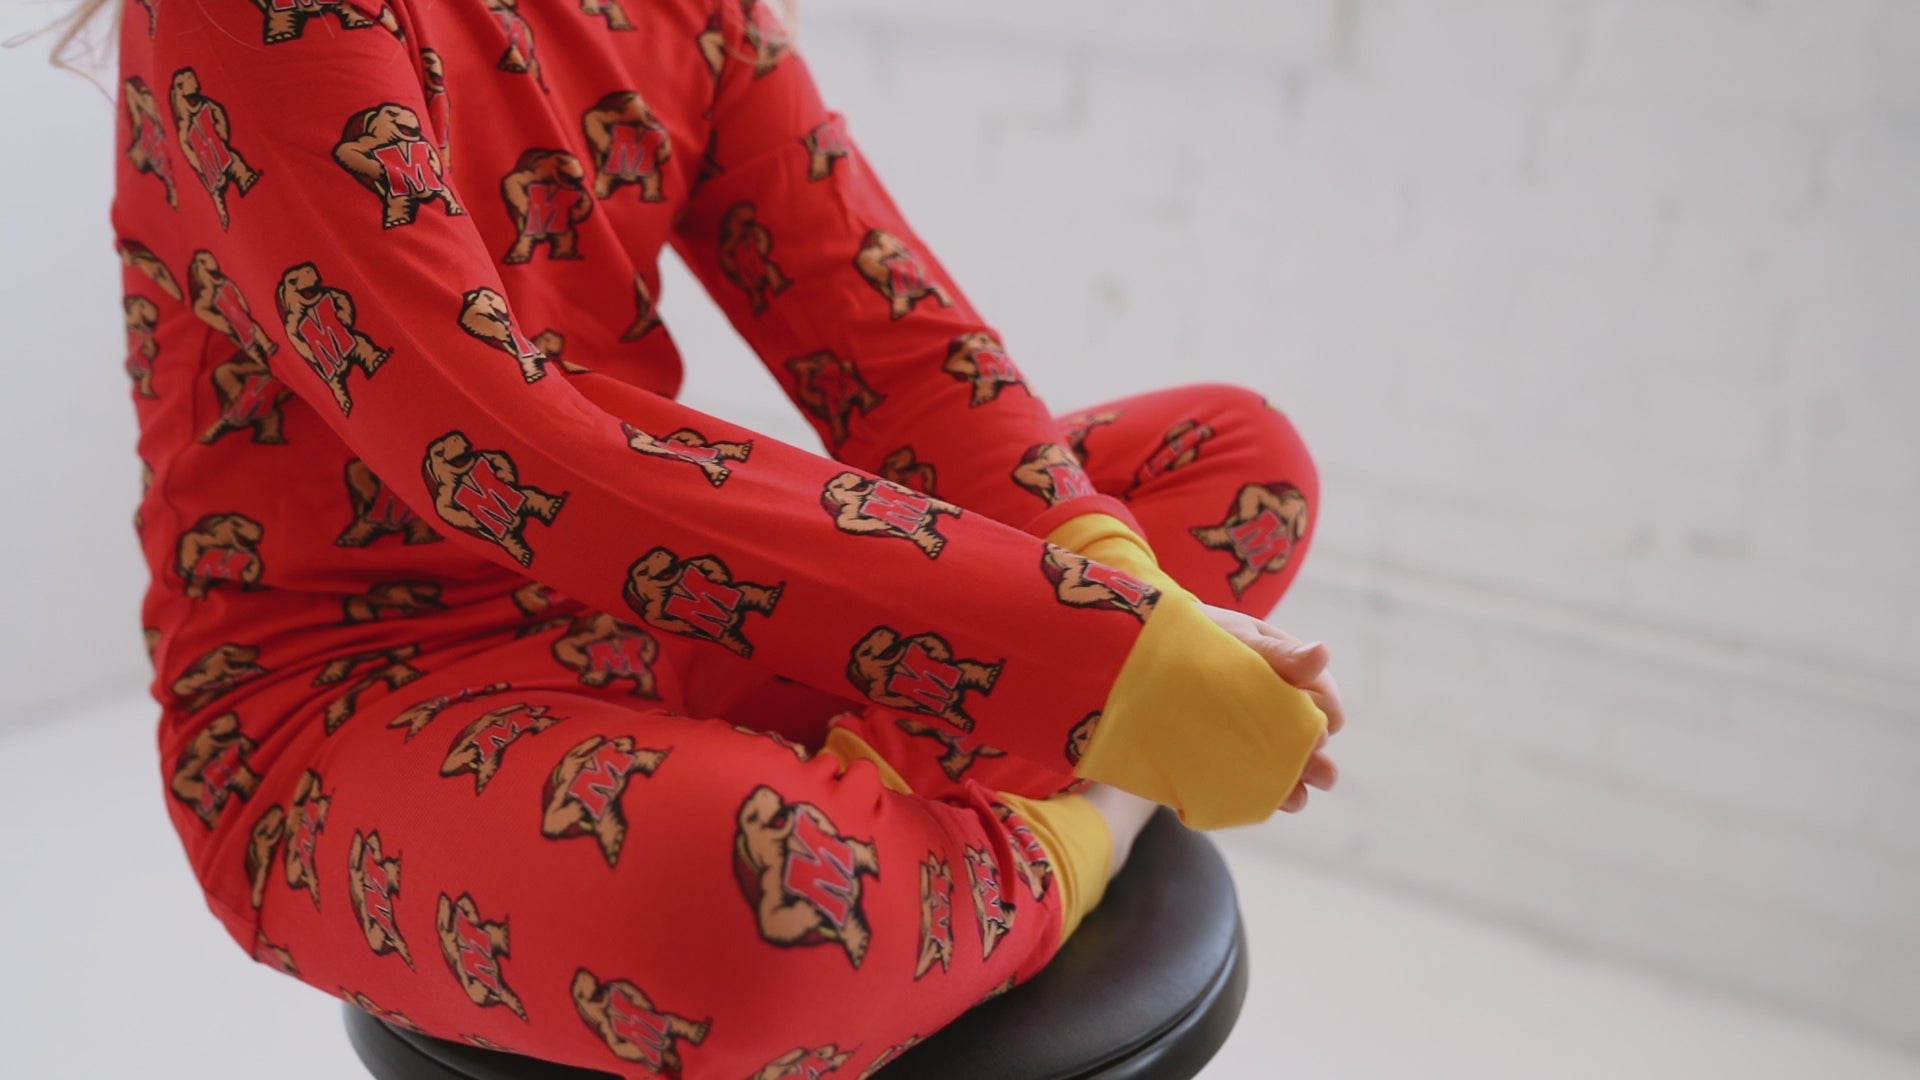 Load video: Tailgate Tikes Iowa Hawkeyes Pajama Video